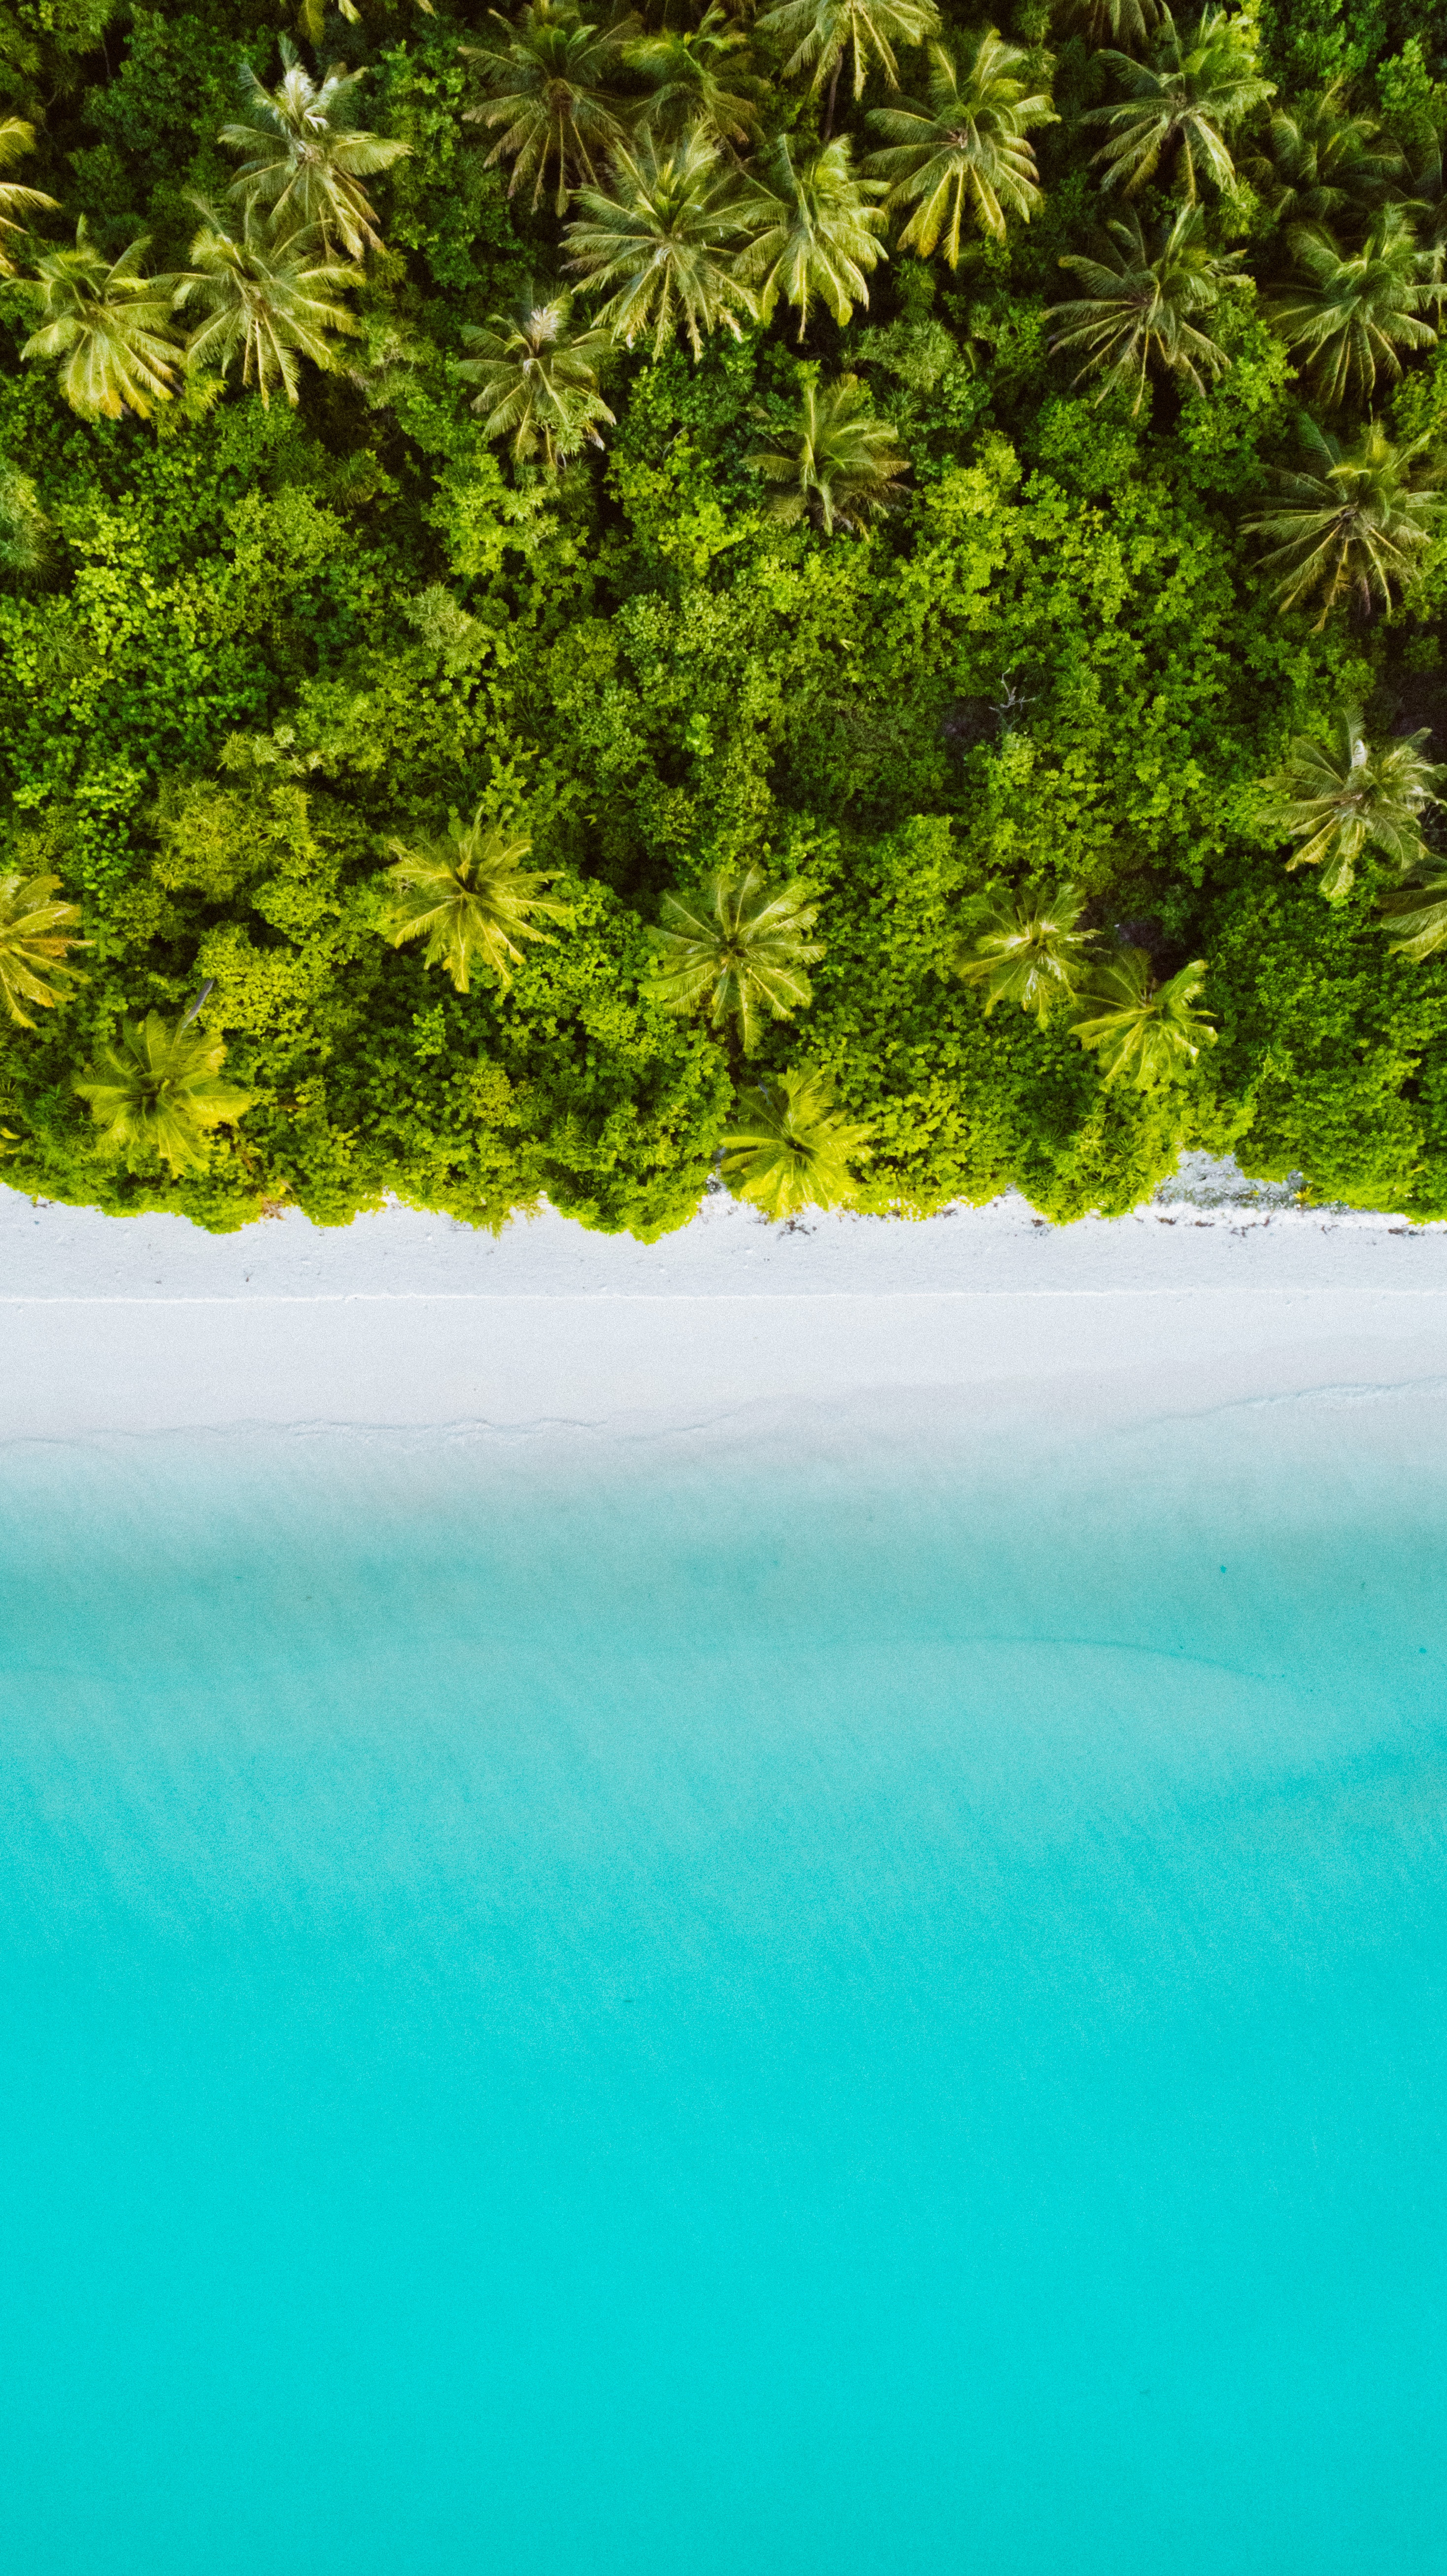 Descarga gratis la imagen Vista Desde Arriba, Océano, Maldivas, Naturaleza, Palms, Oceano, Zona Tropical, Trópico, Playa en el escritorio de tu PC